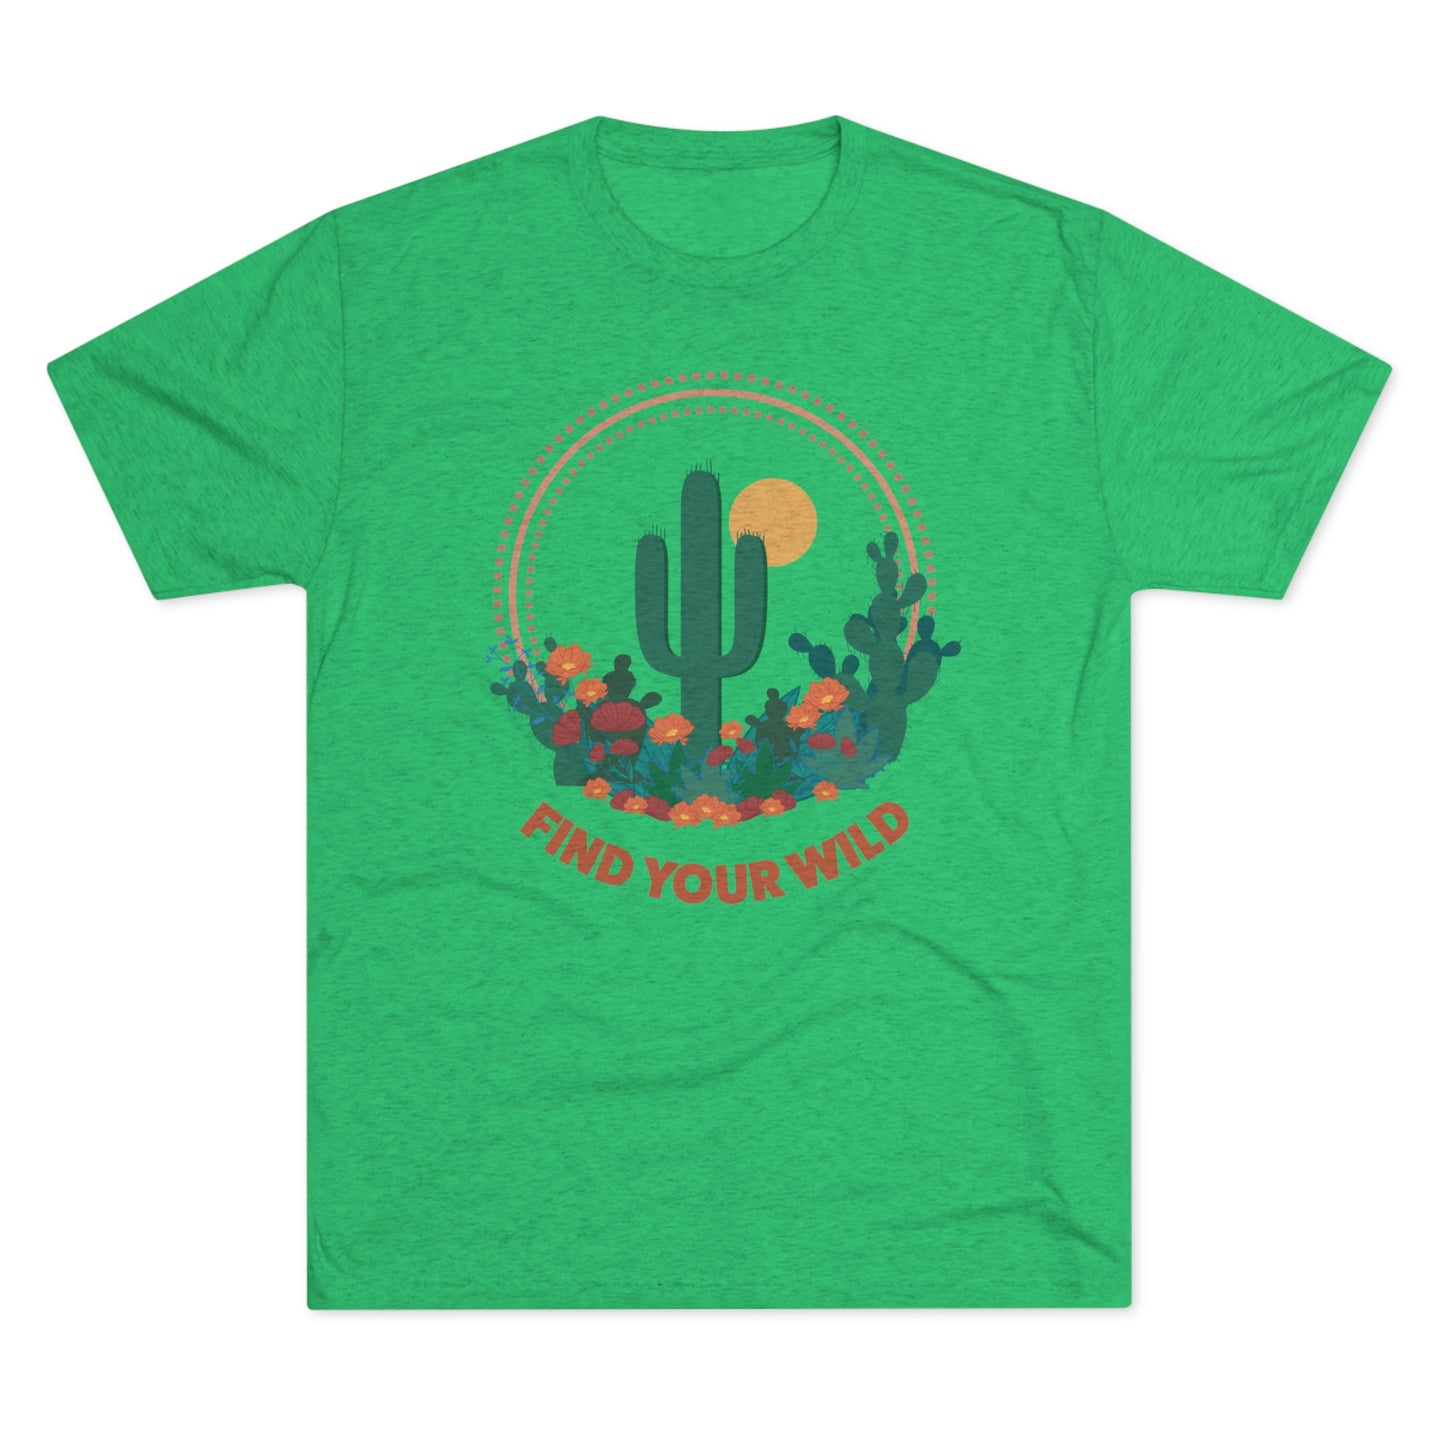 Find Your Wild Cactus Desert Unisex Tri-Blend Crew Tee